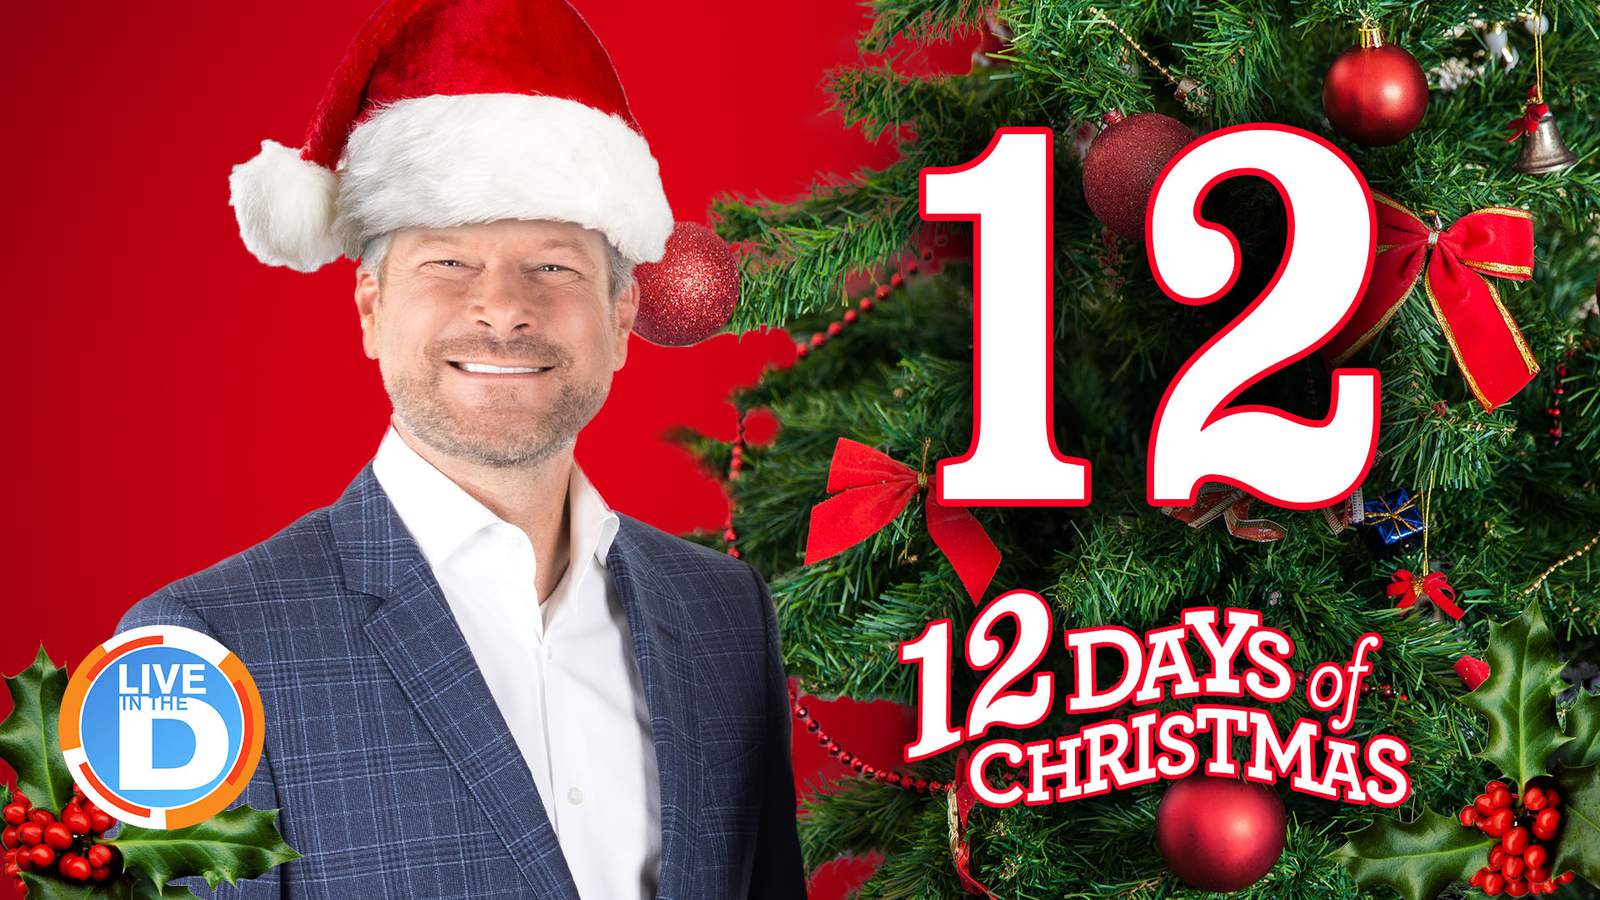 Jason’s 12 Days of Christmas: Day 12